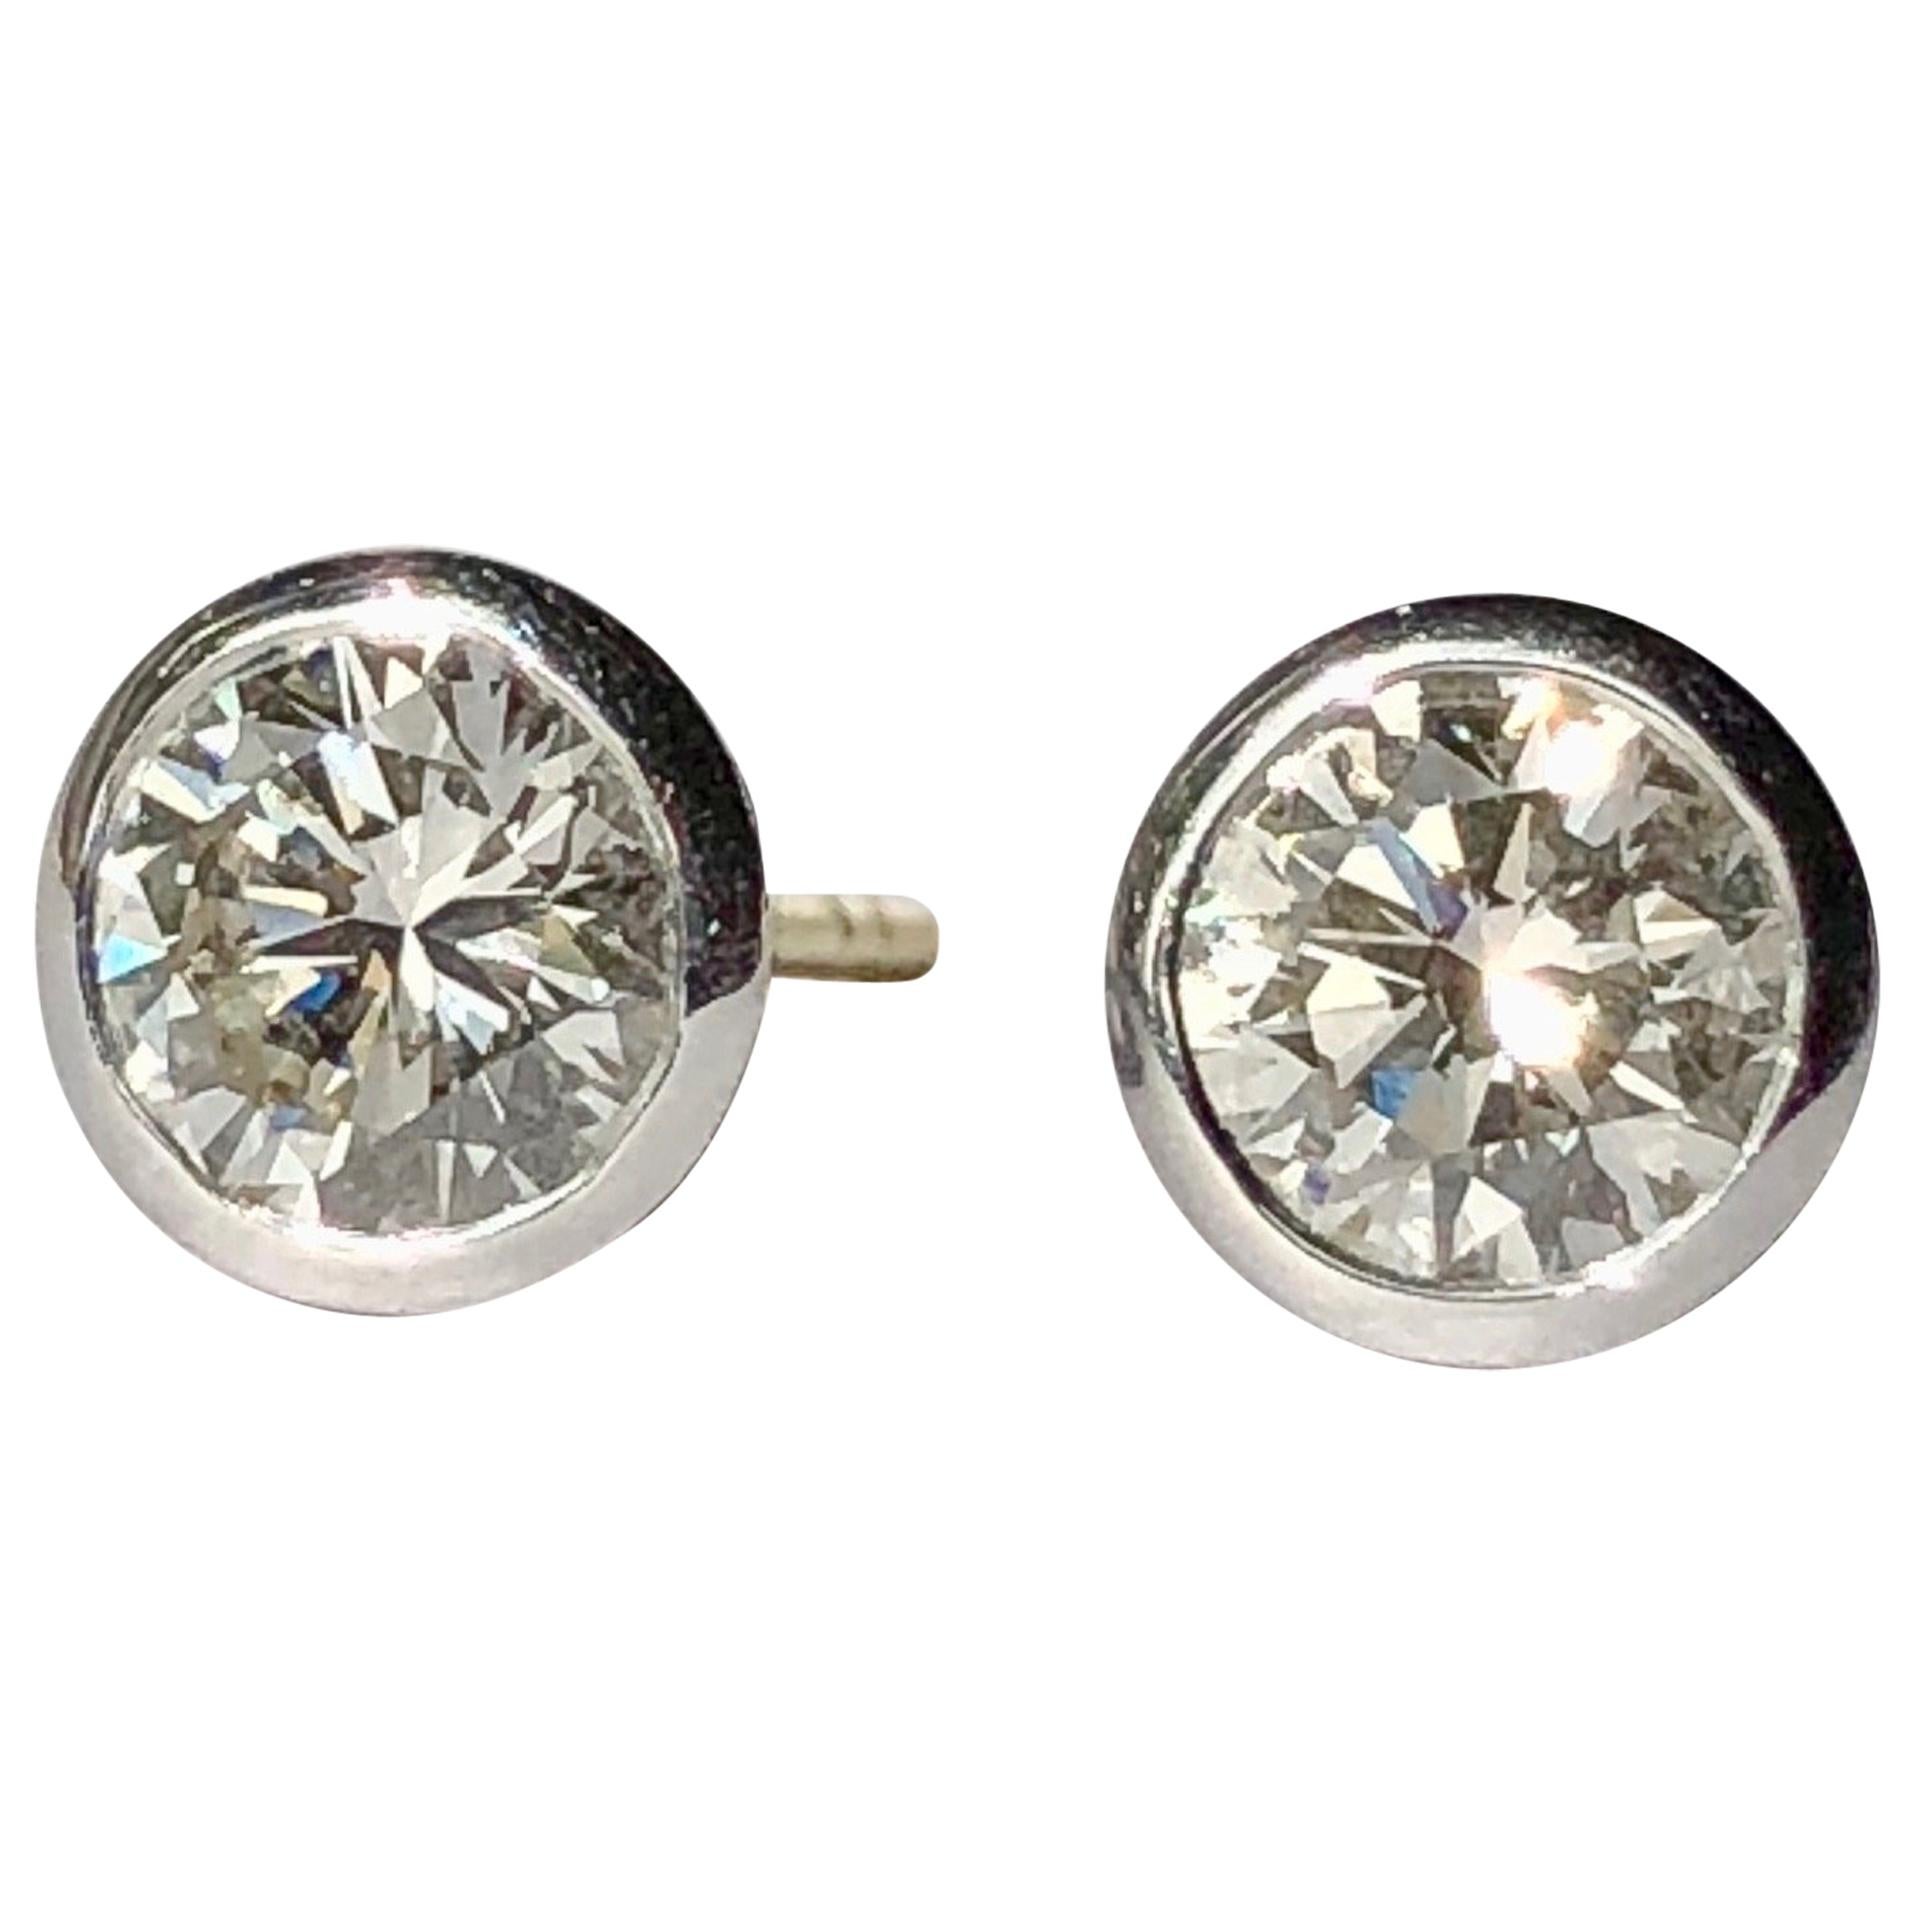 White Diamond Earrings Studs Single Stone Round Brilliant Cut Solitaire 18k Gold